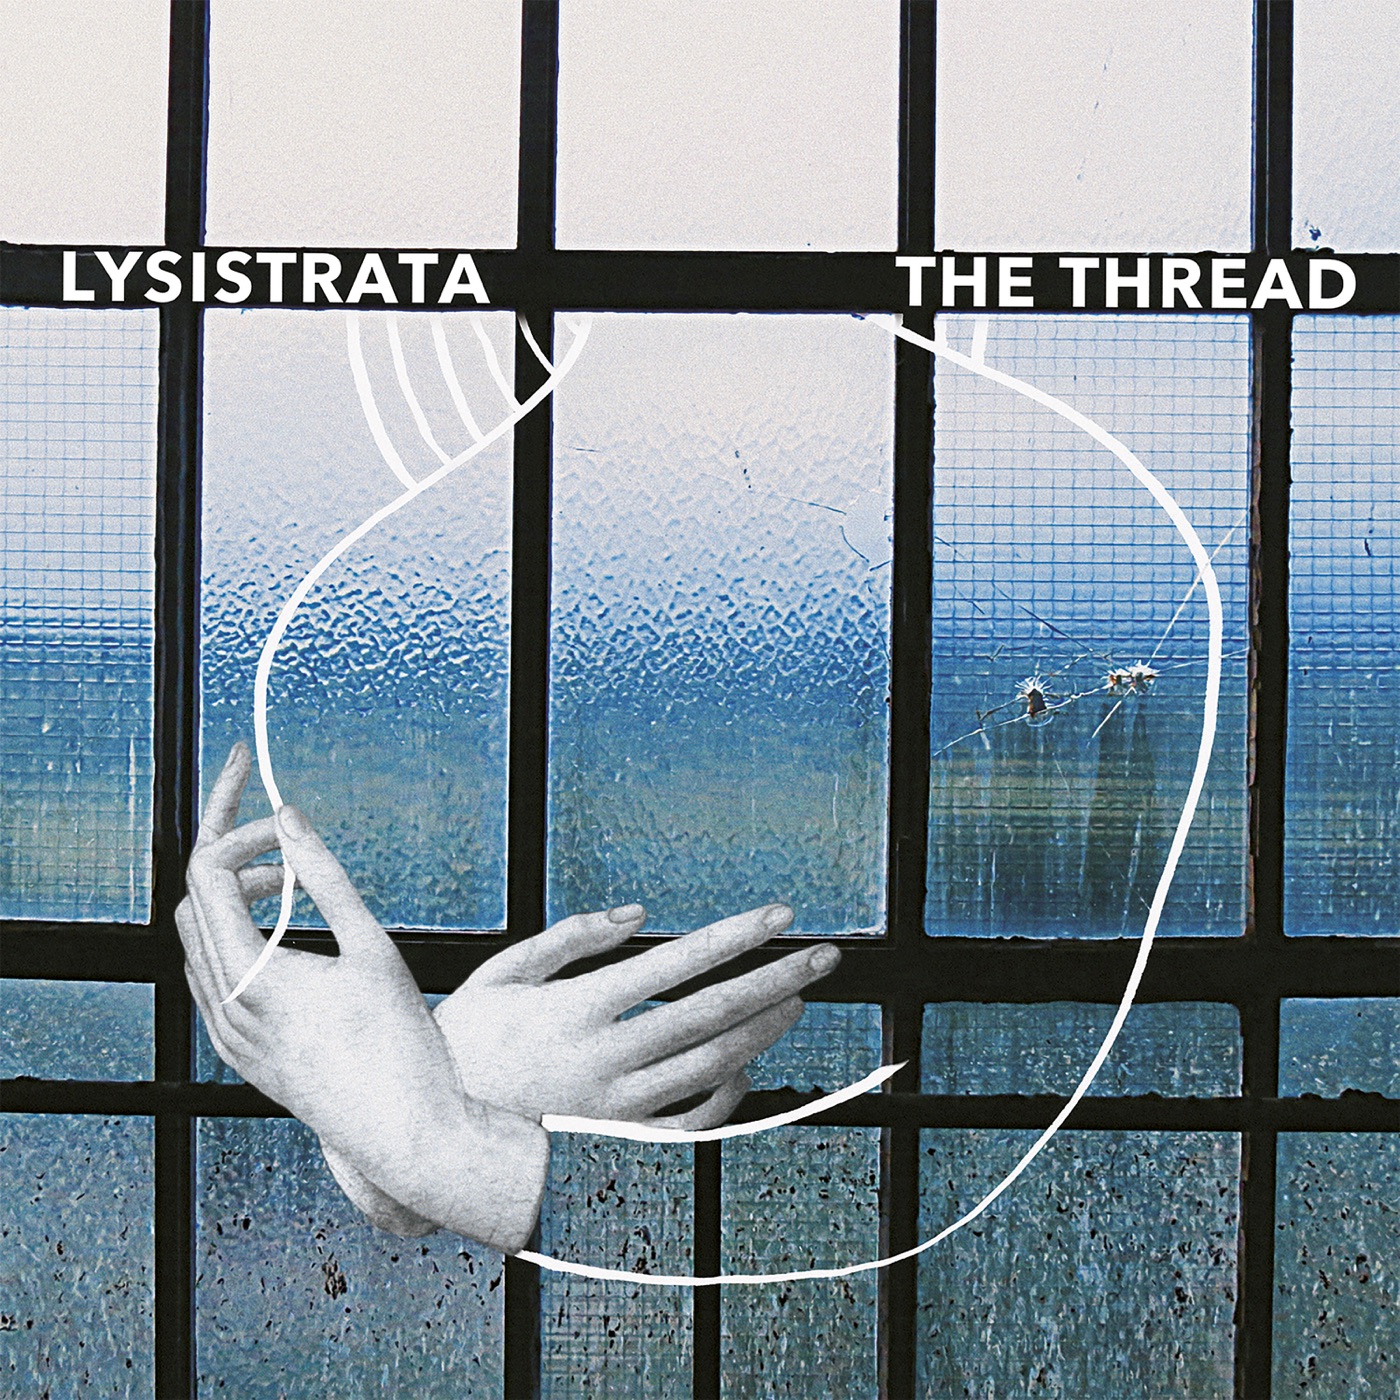 The Thread by Lysistrata